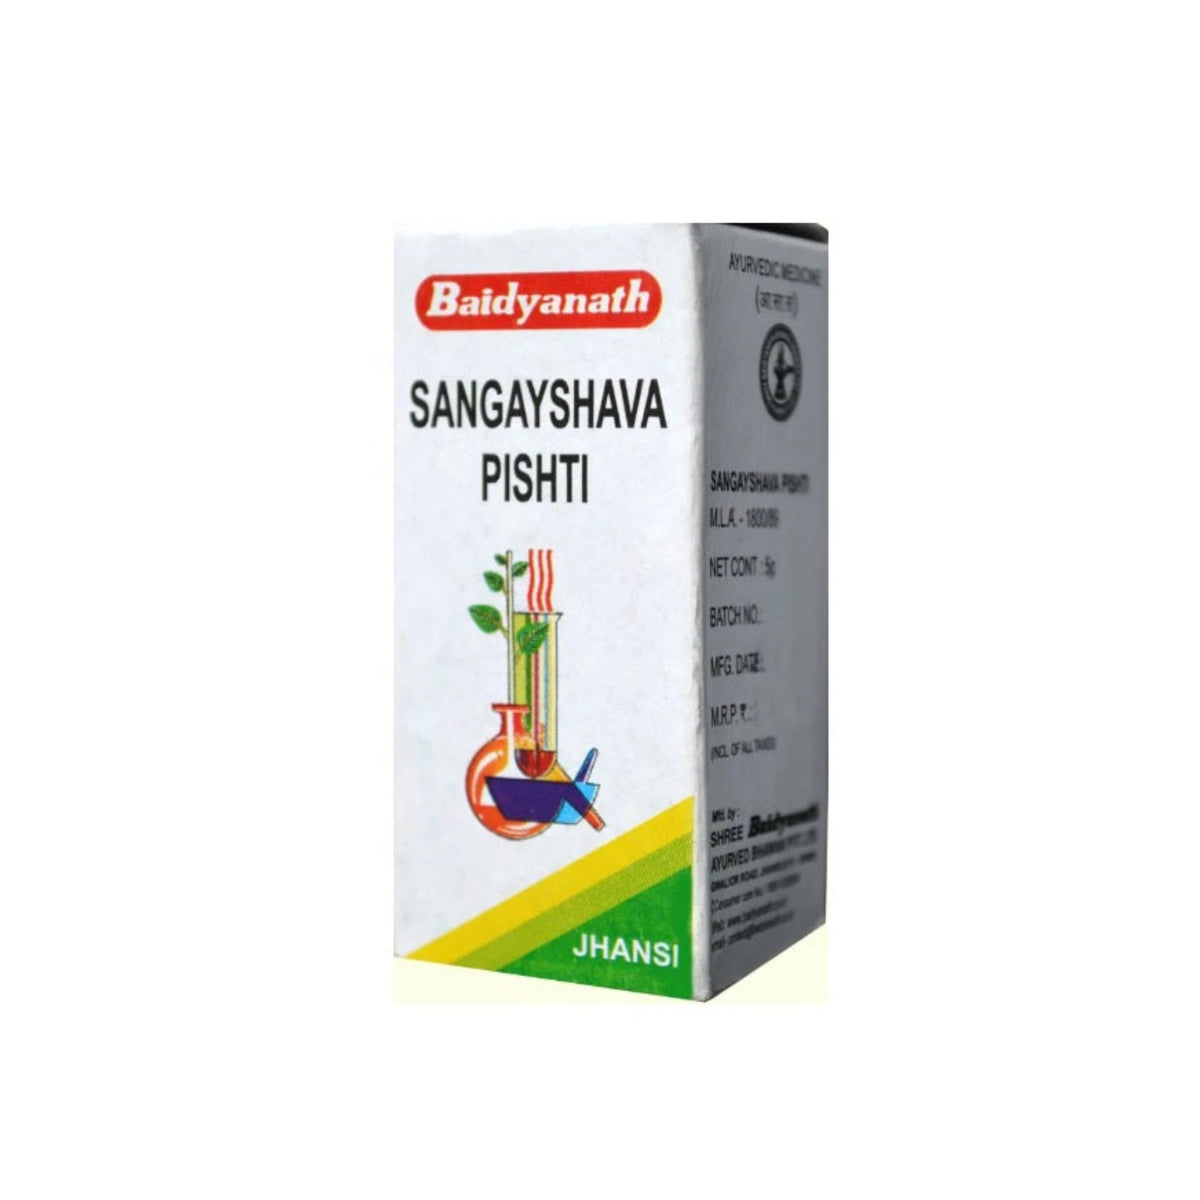 Baidyanath Ayurvedic (Jhansi) Sangayshava Pishti Powder 5gm